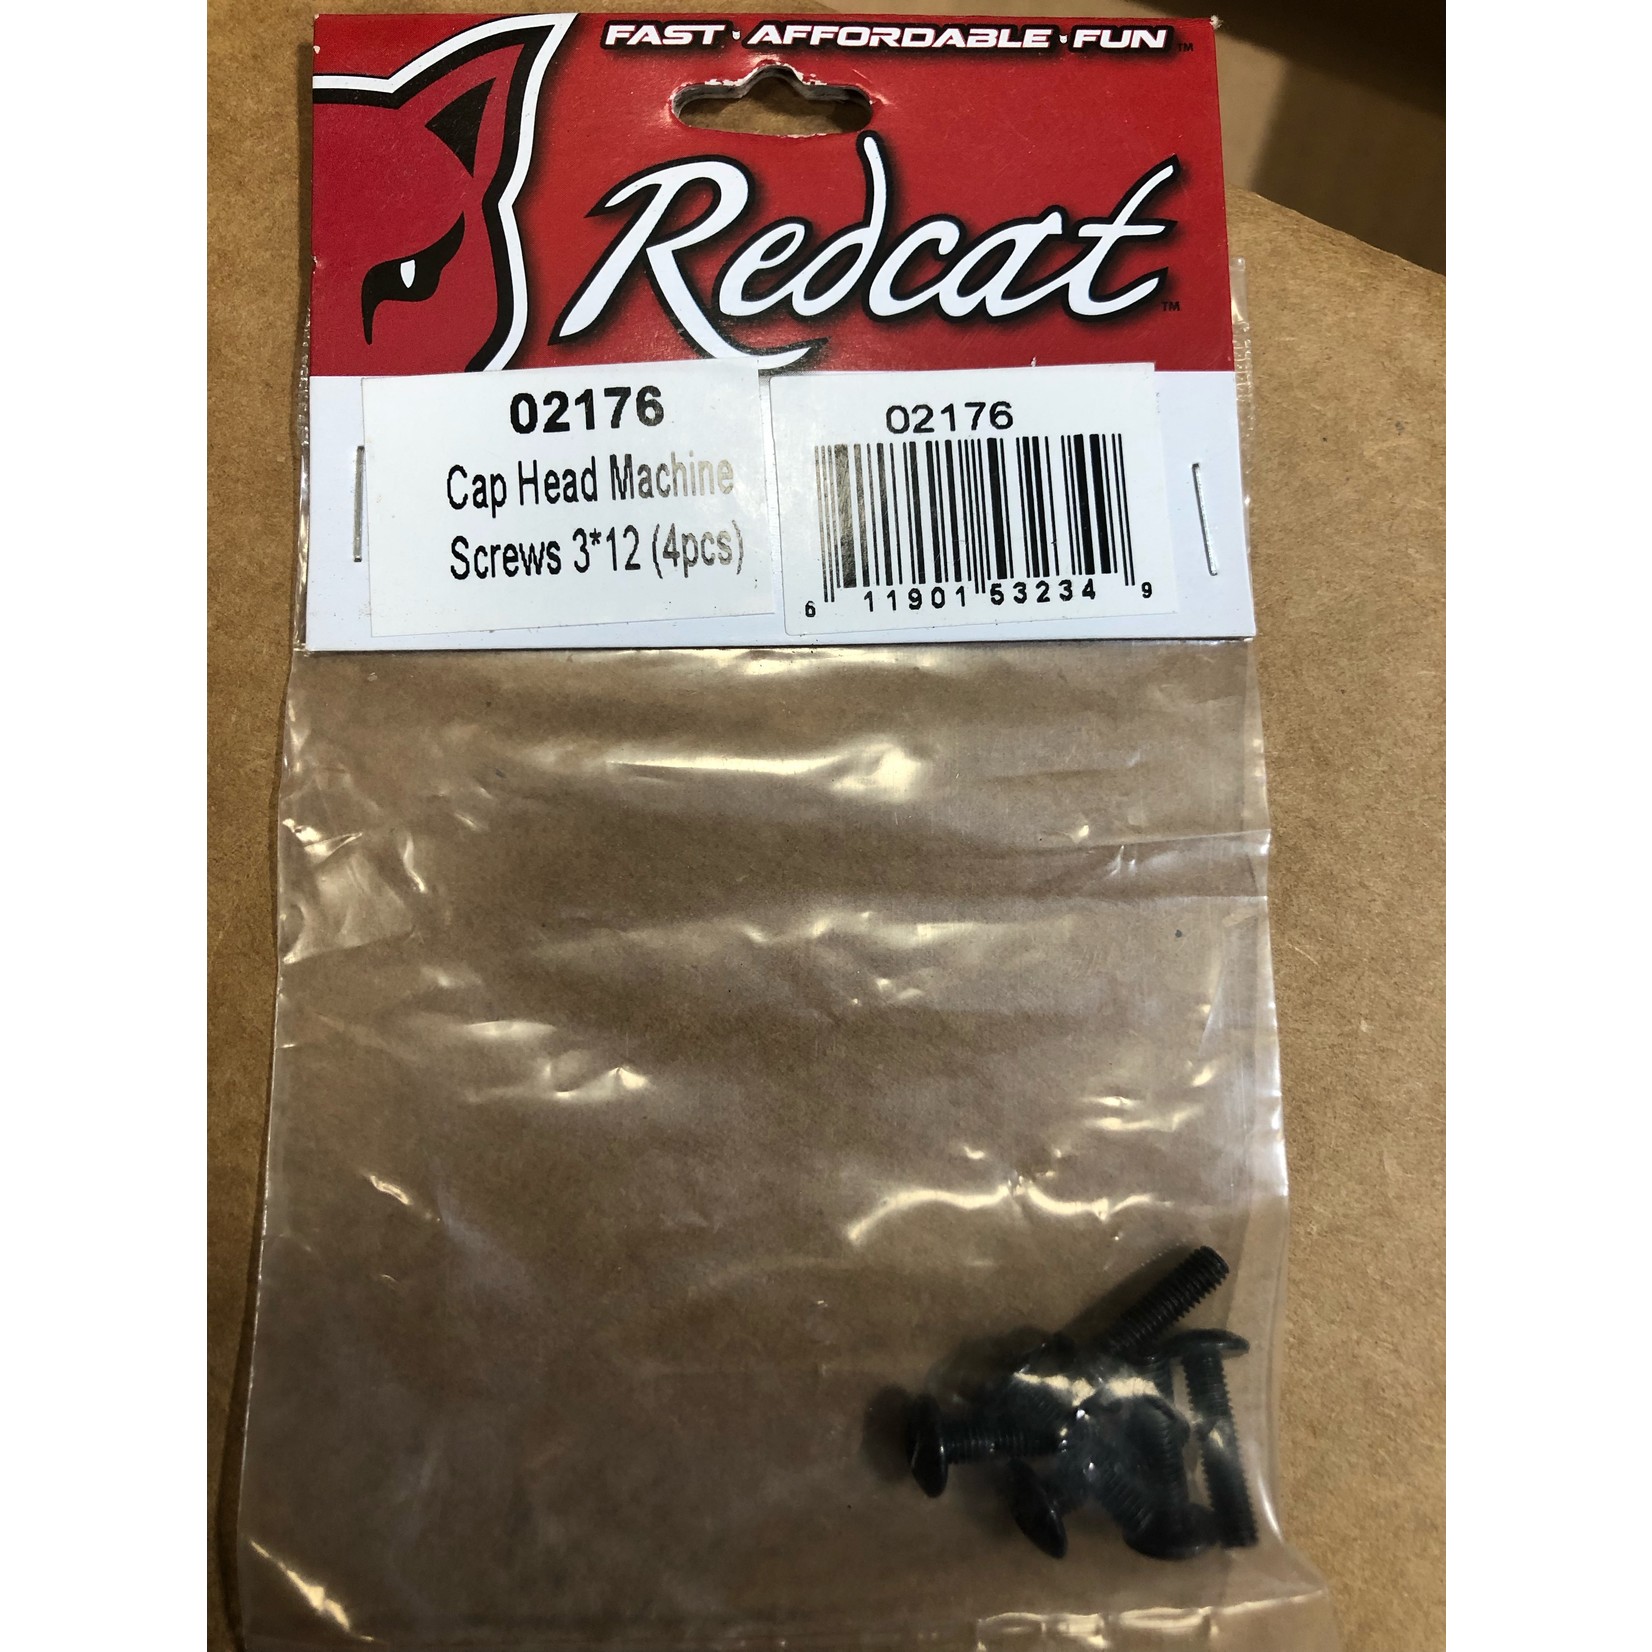 Redcat Racing Cap Head Machine Screws 3*12 (4pcs)